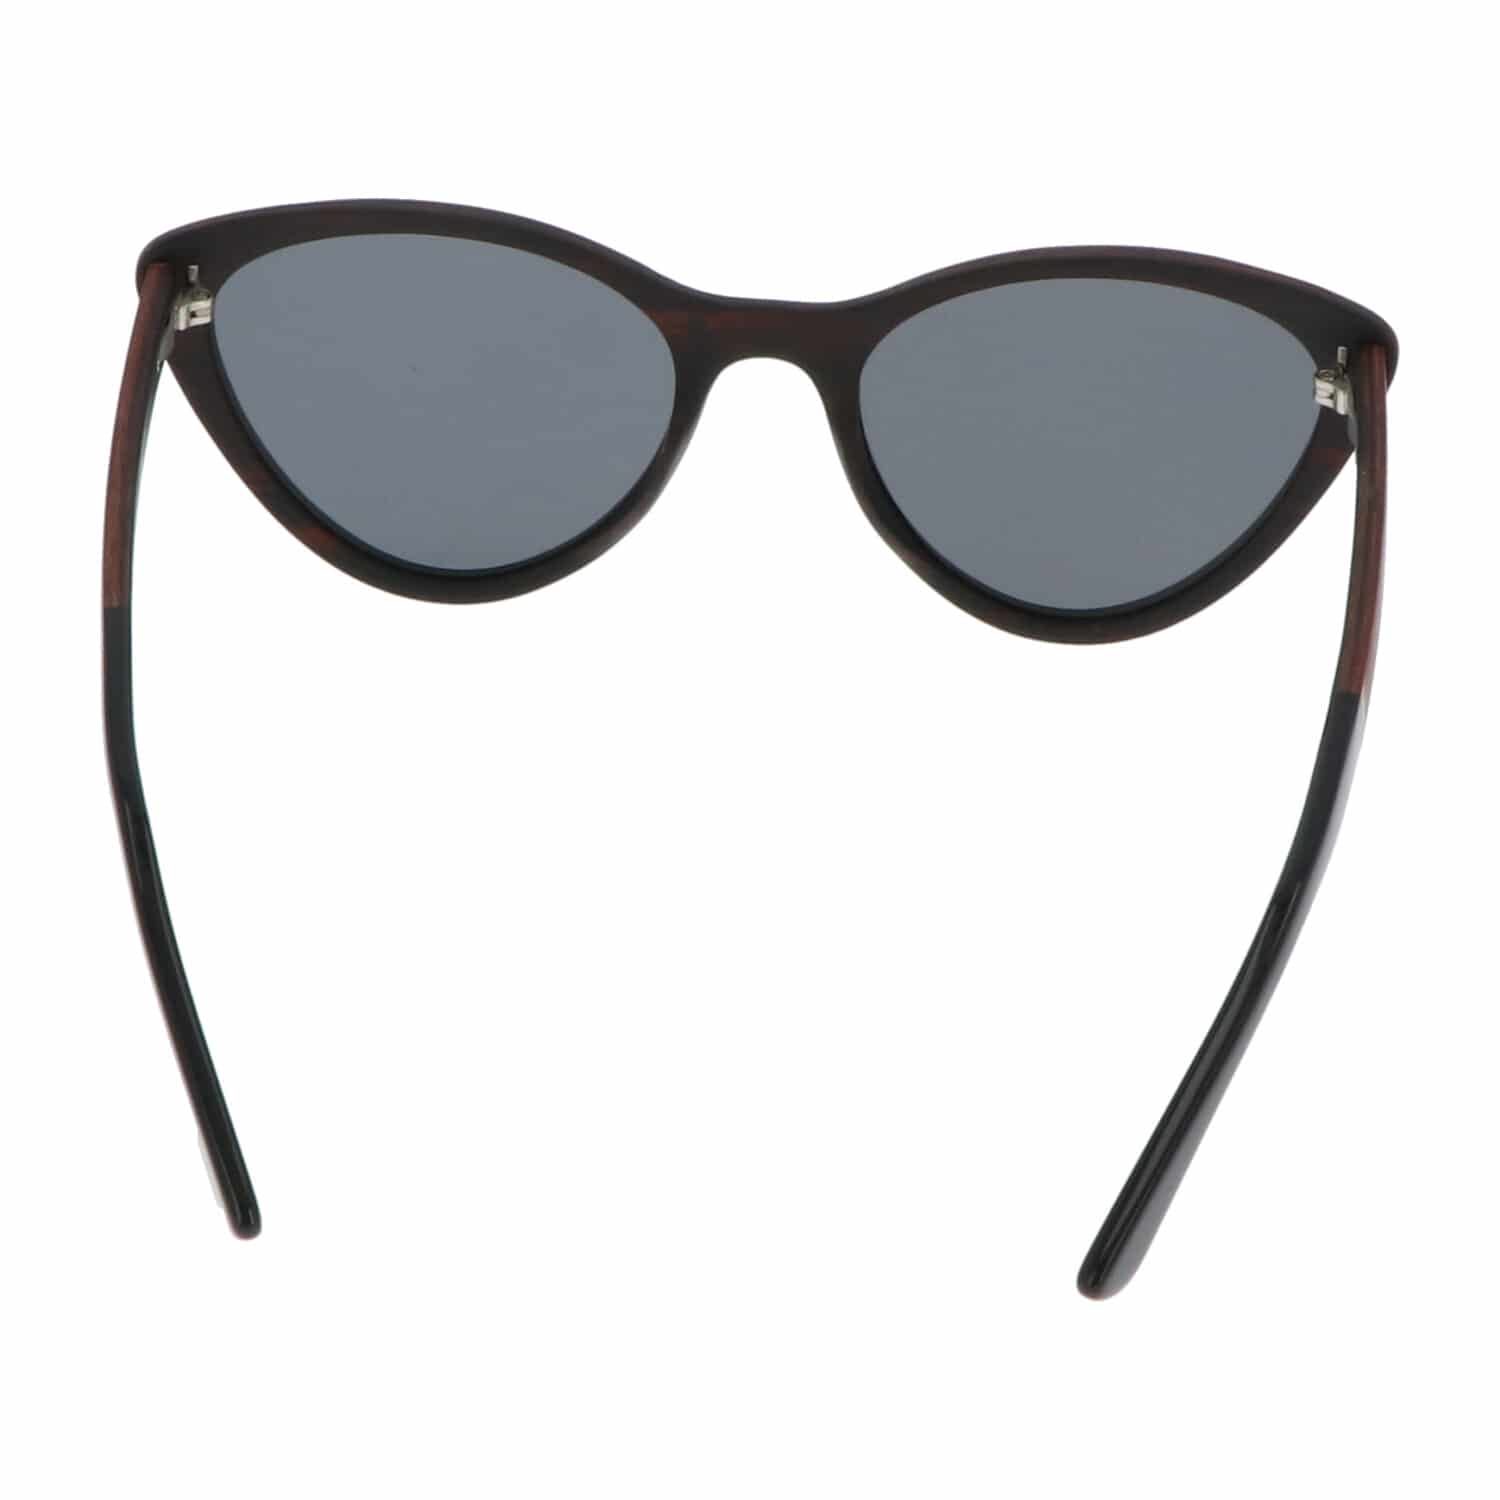 5one® Cecina Cateye Grey - zonnebril met Kosso/Ebony houten montuur